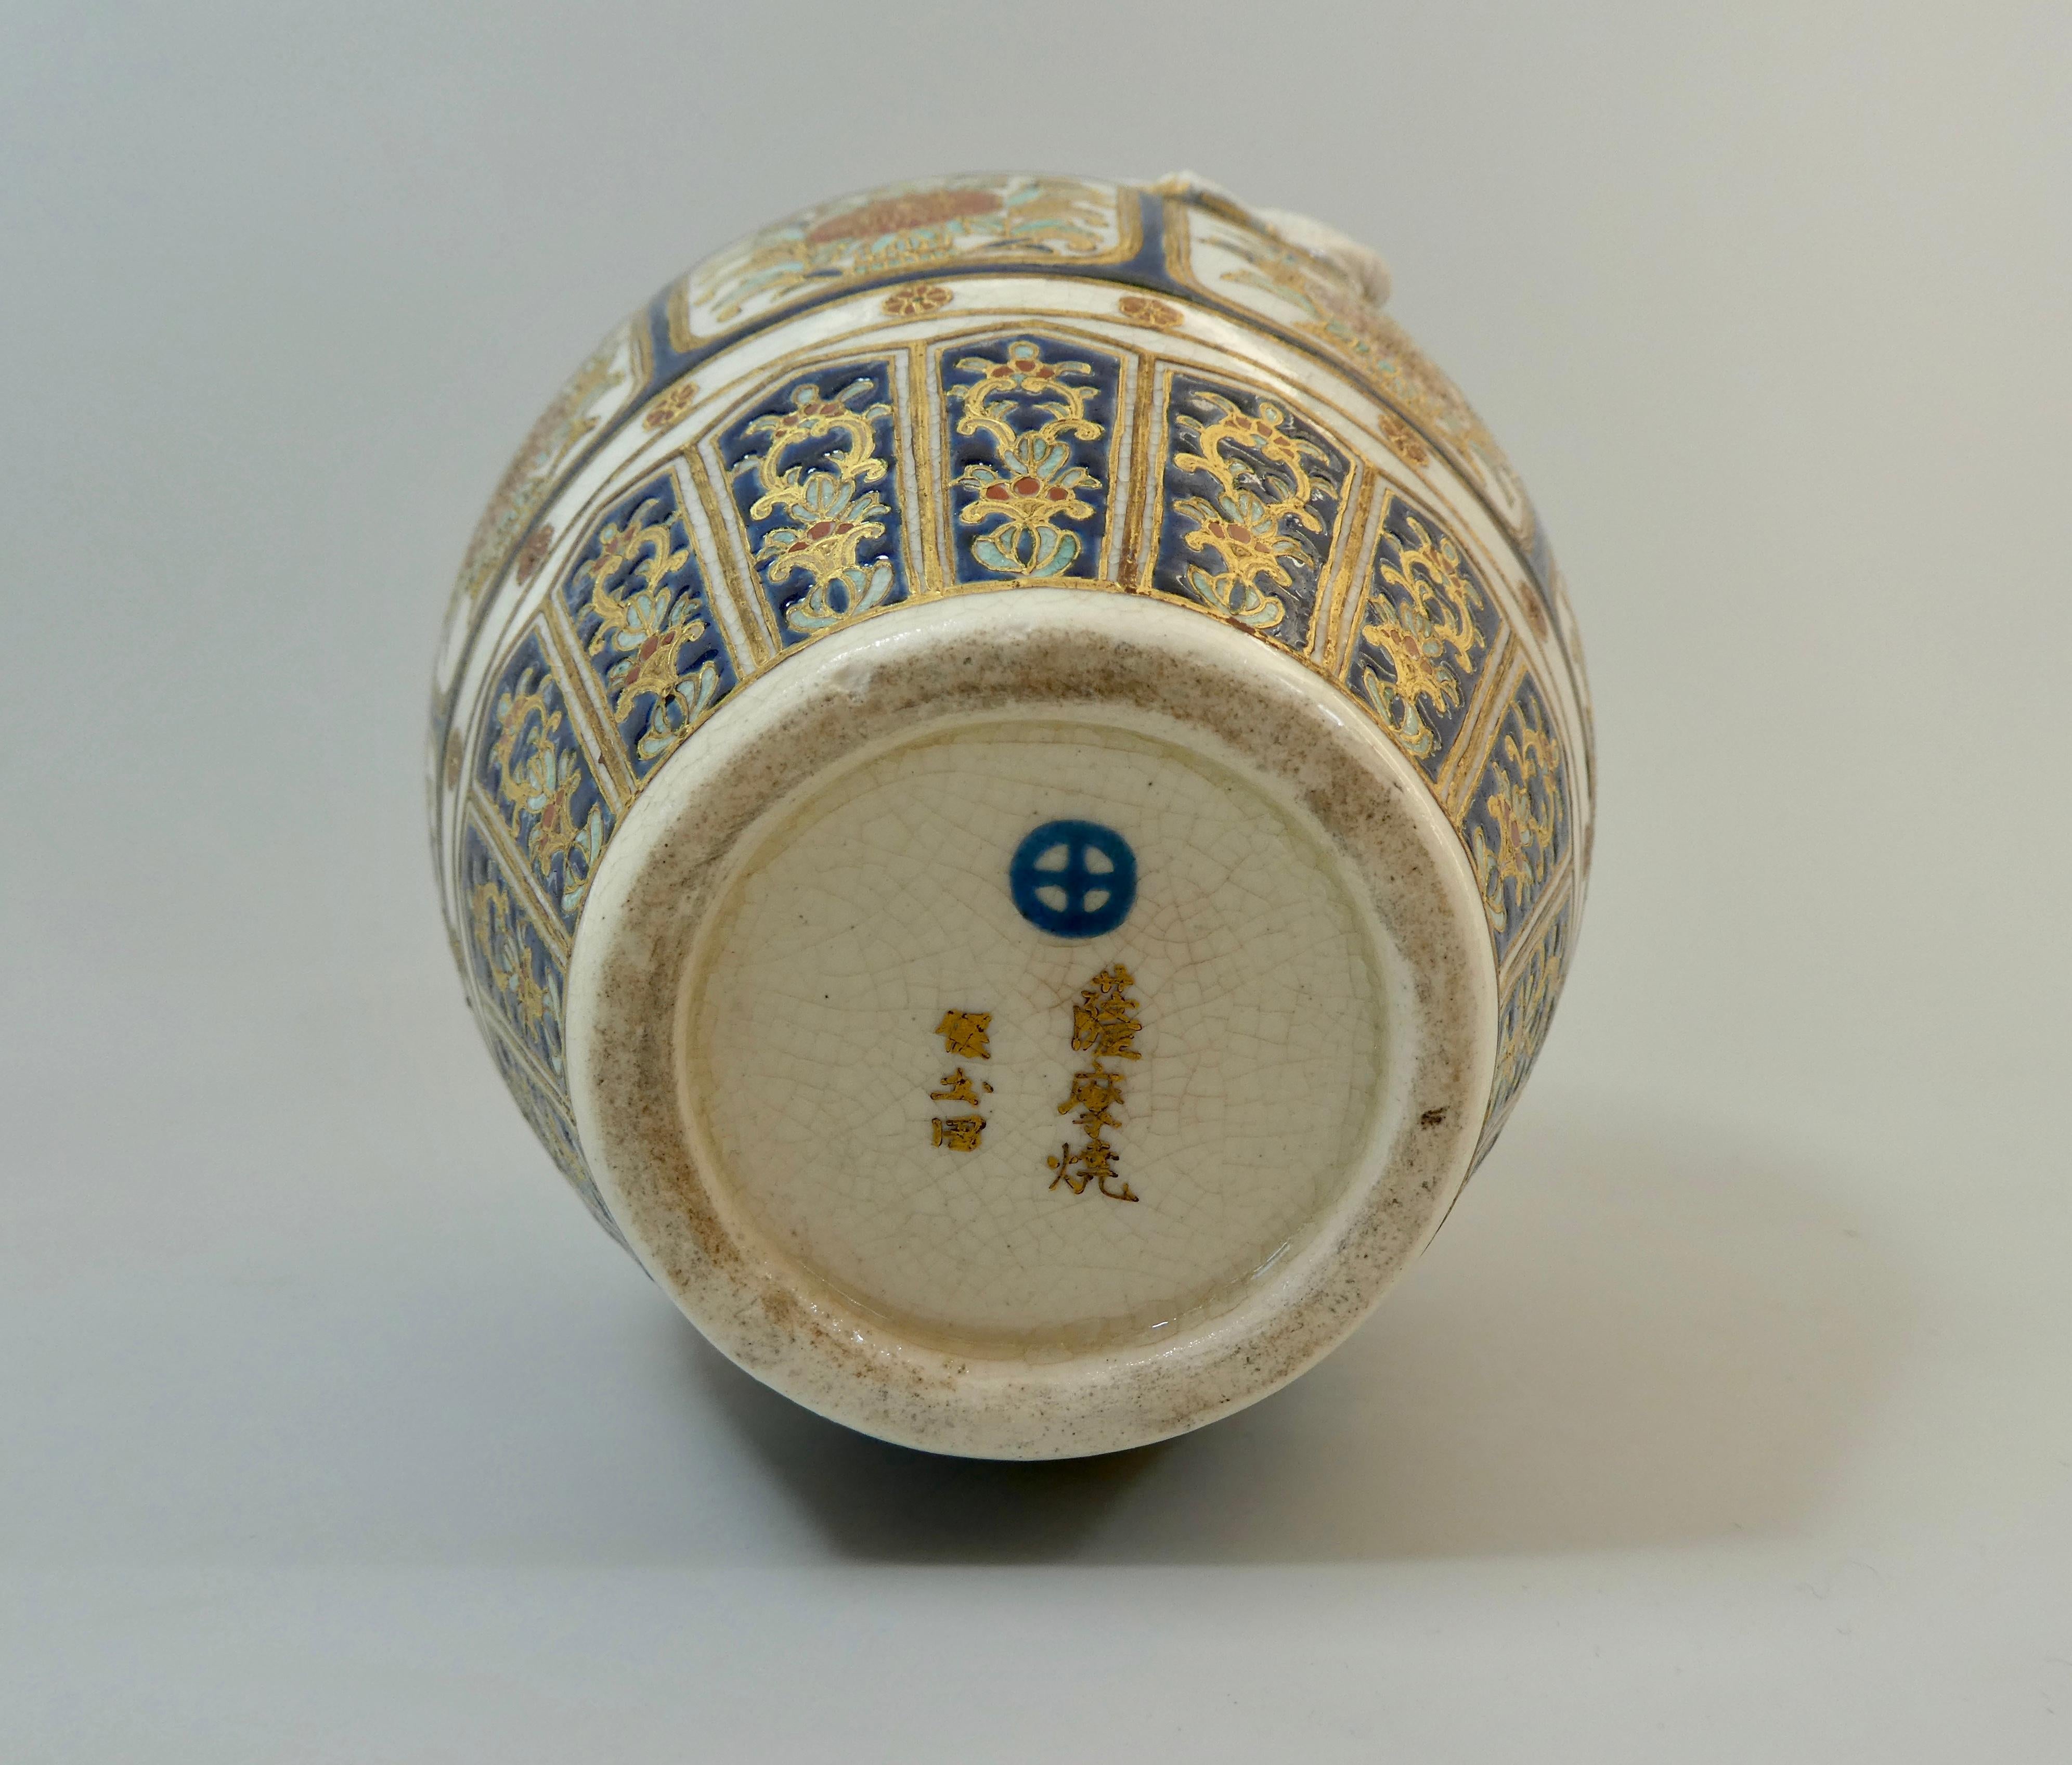 Earthenware Imperial Satsuma earthenware vase, circa 1870, Meiji Period.